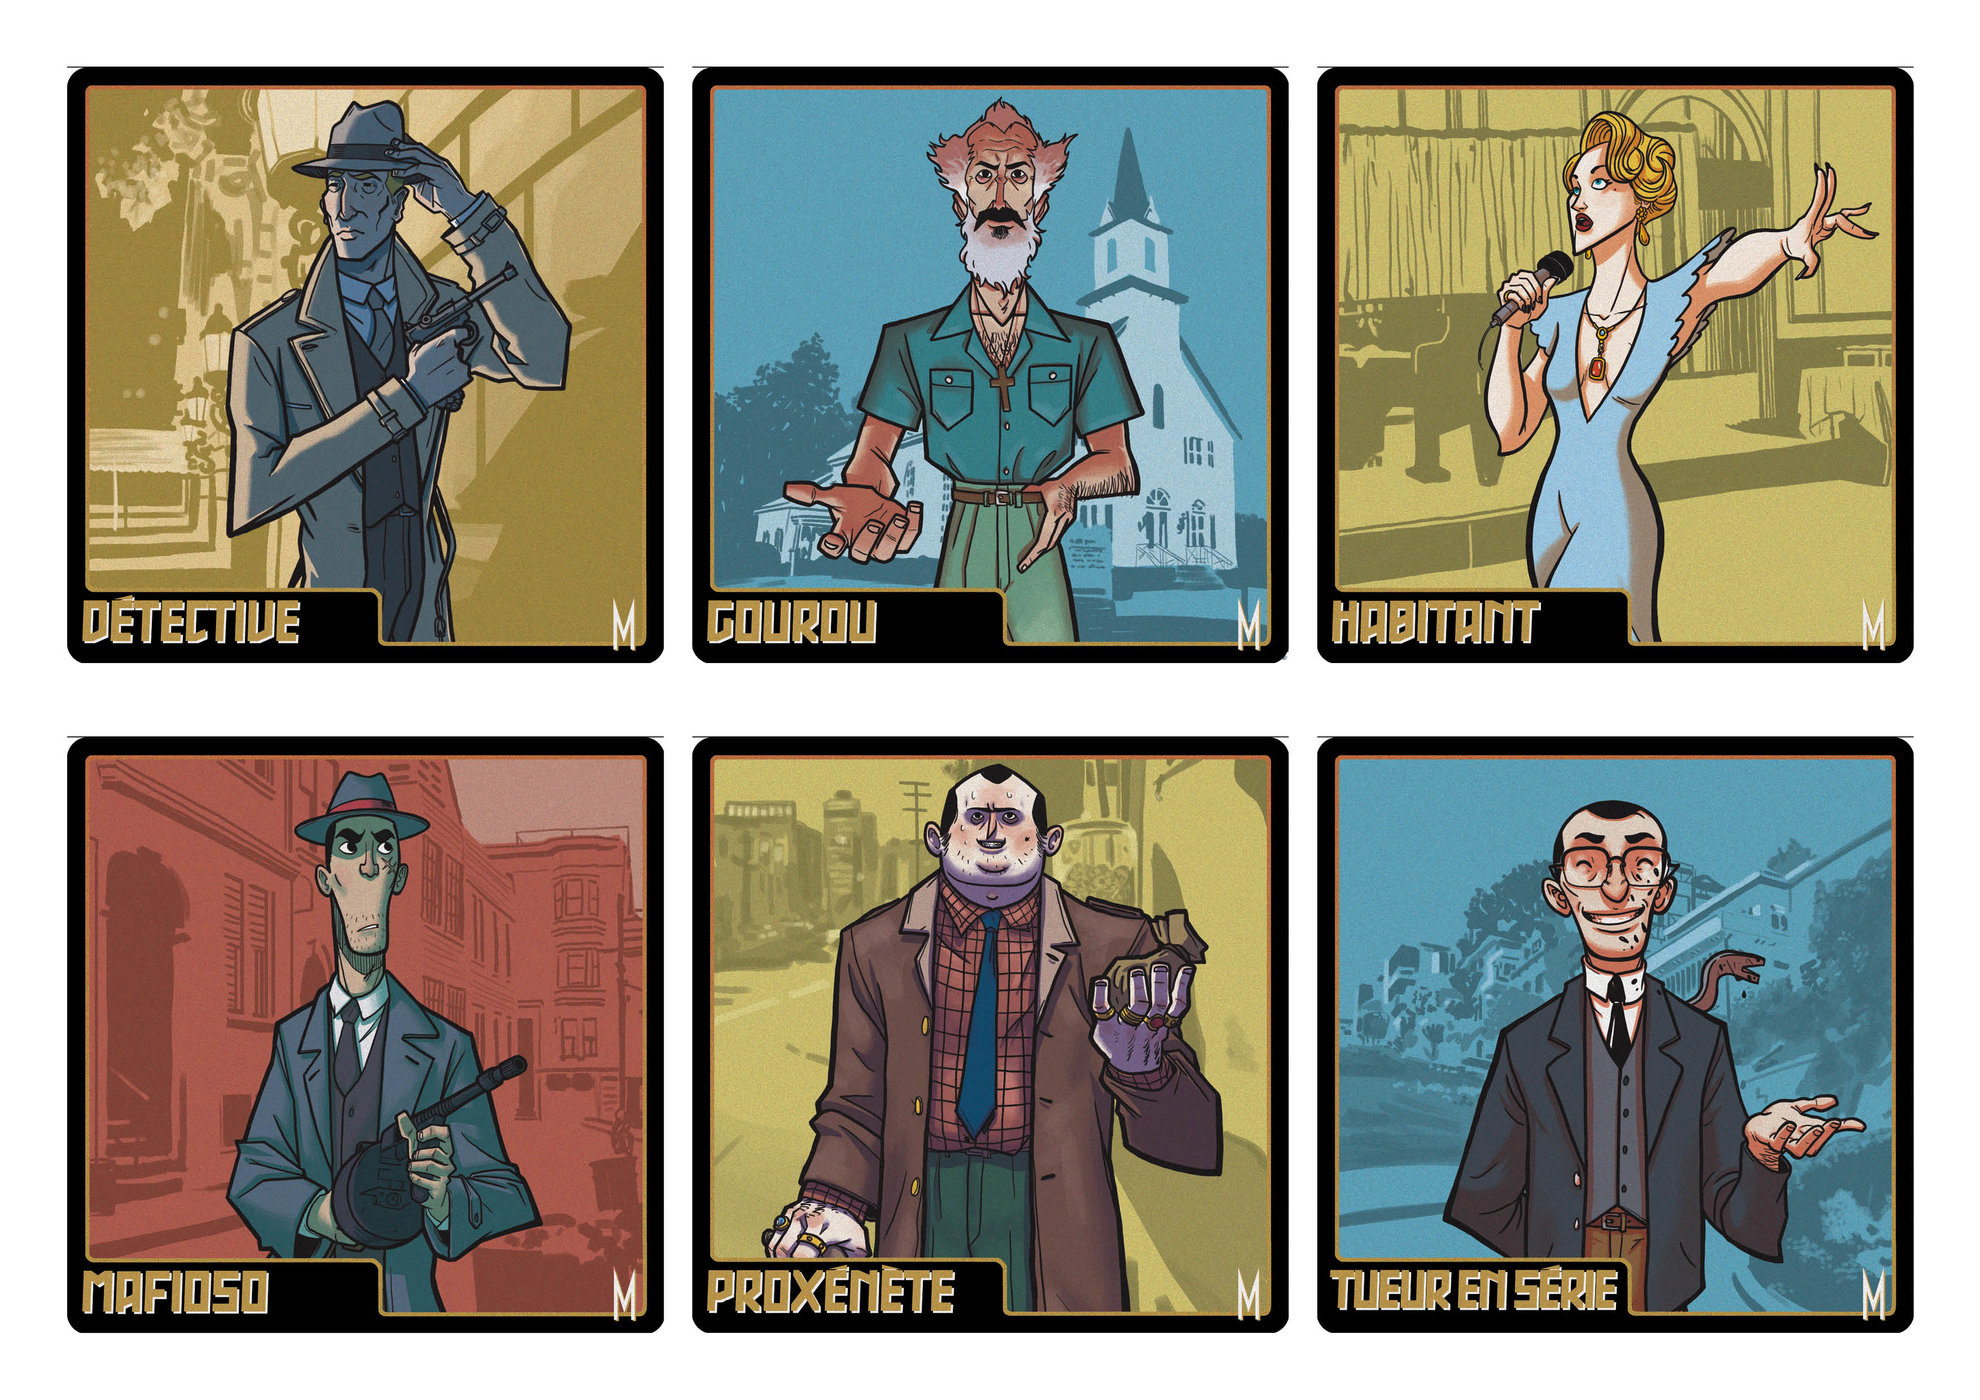 Mafia (6 out of 22 cards)